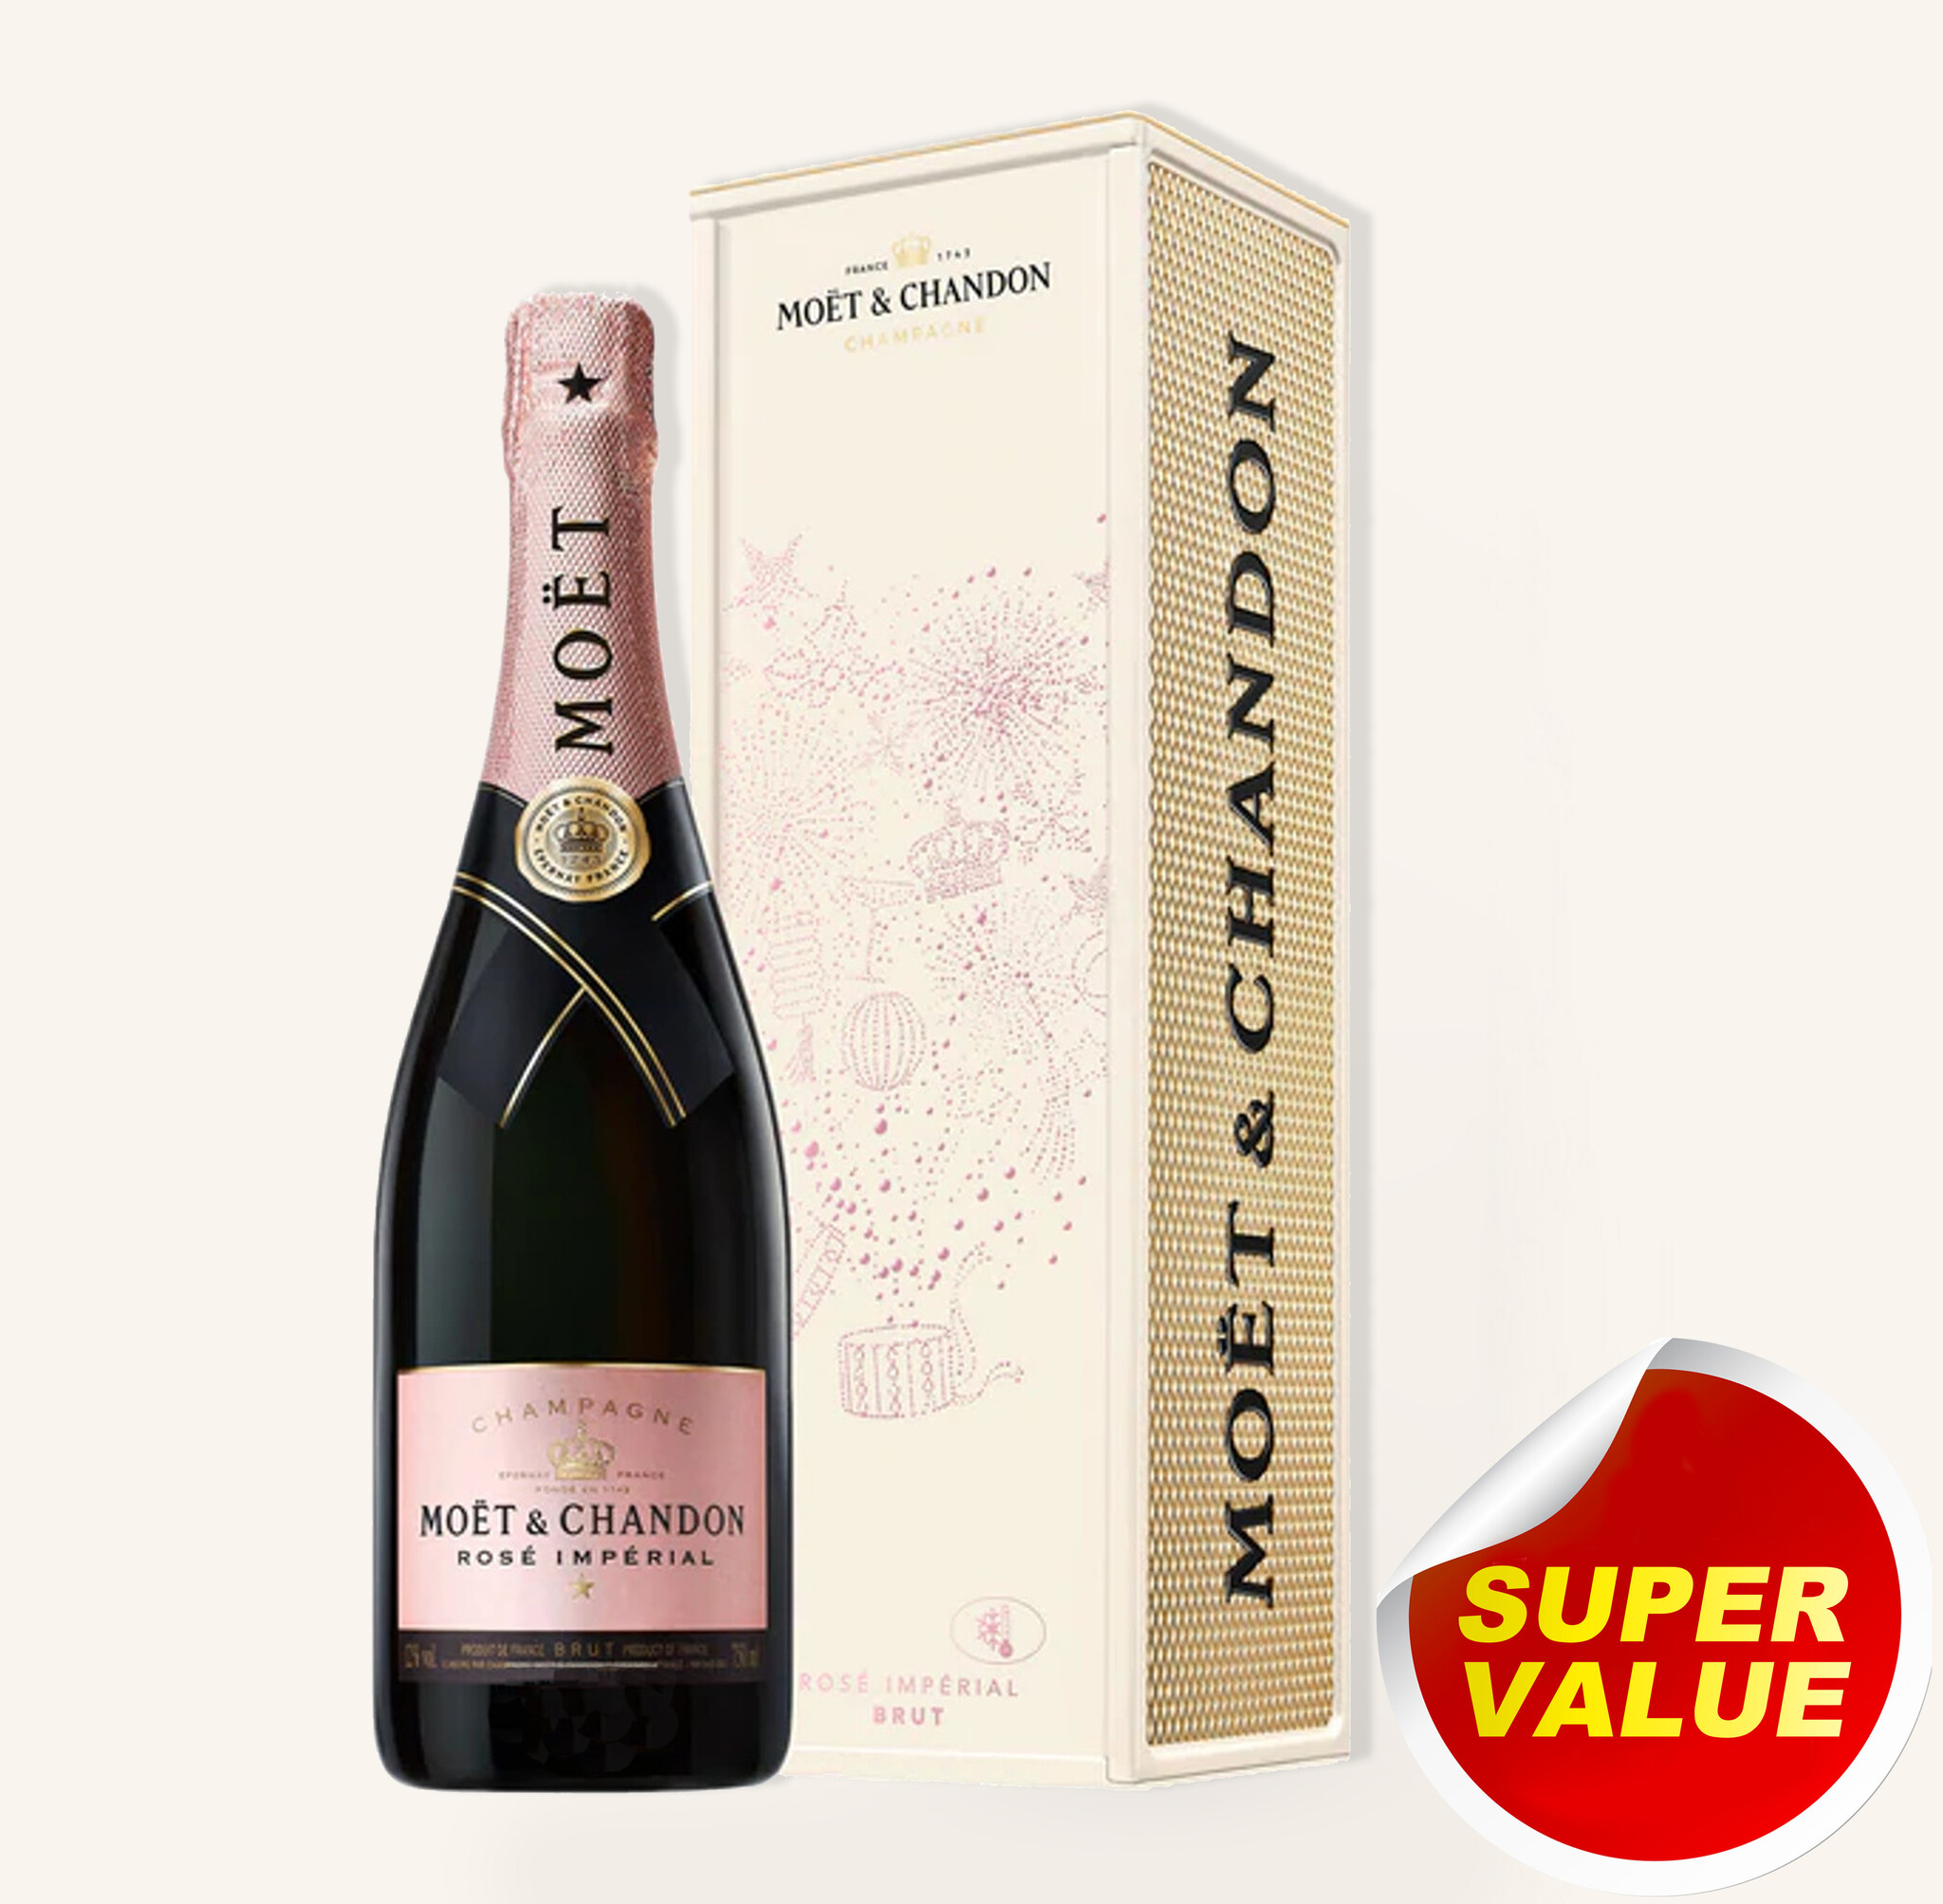 Moet & Chandon Champagne Brut Rose Imperial Gift Box 750ml $62